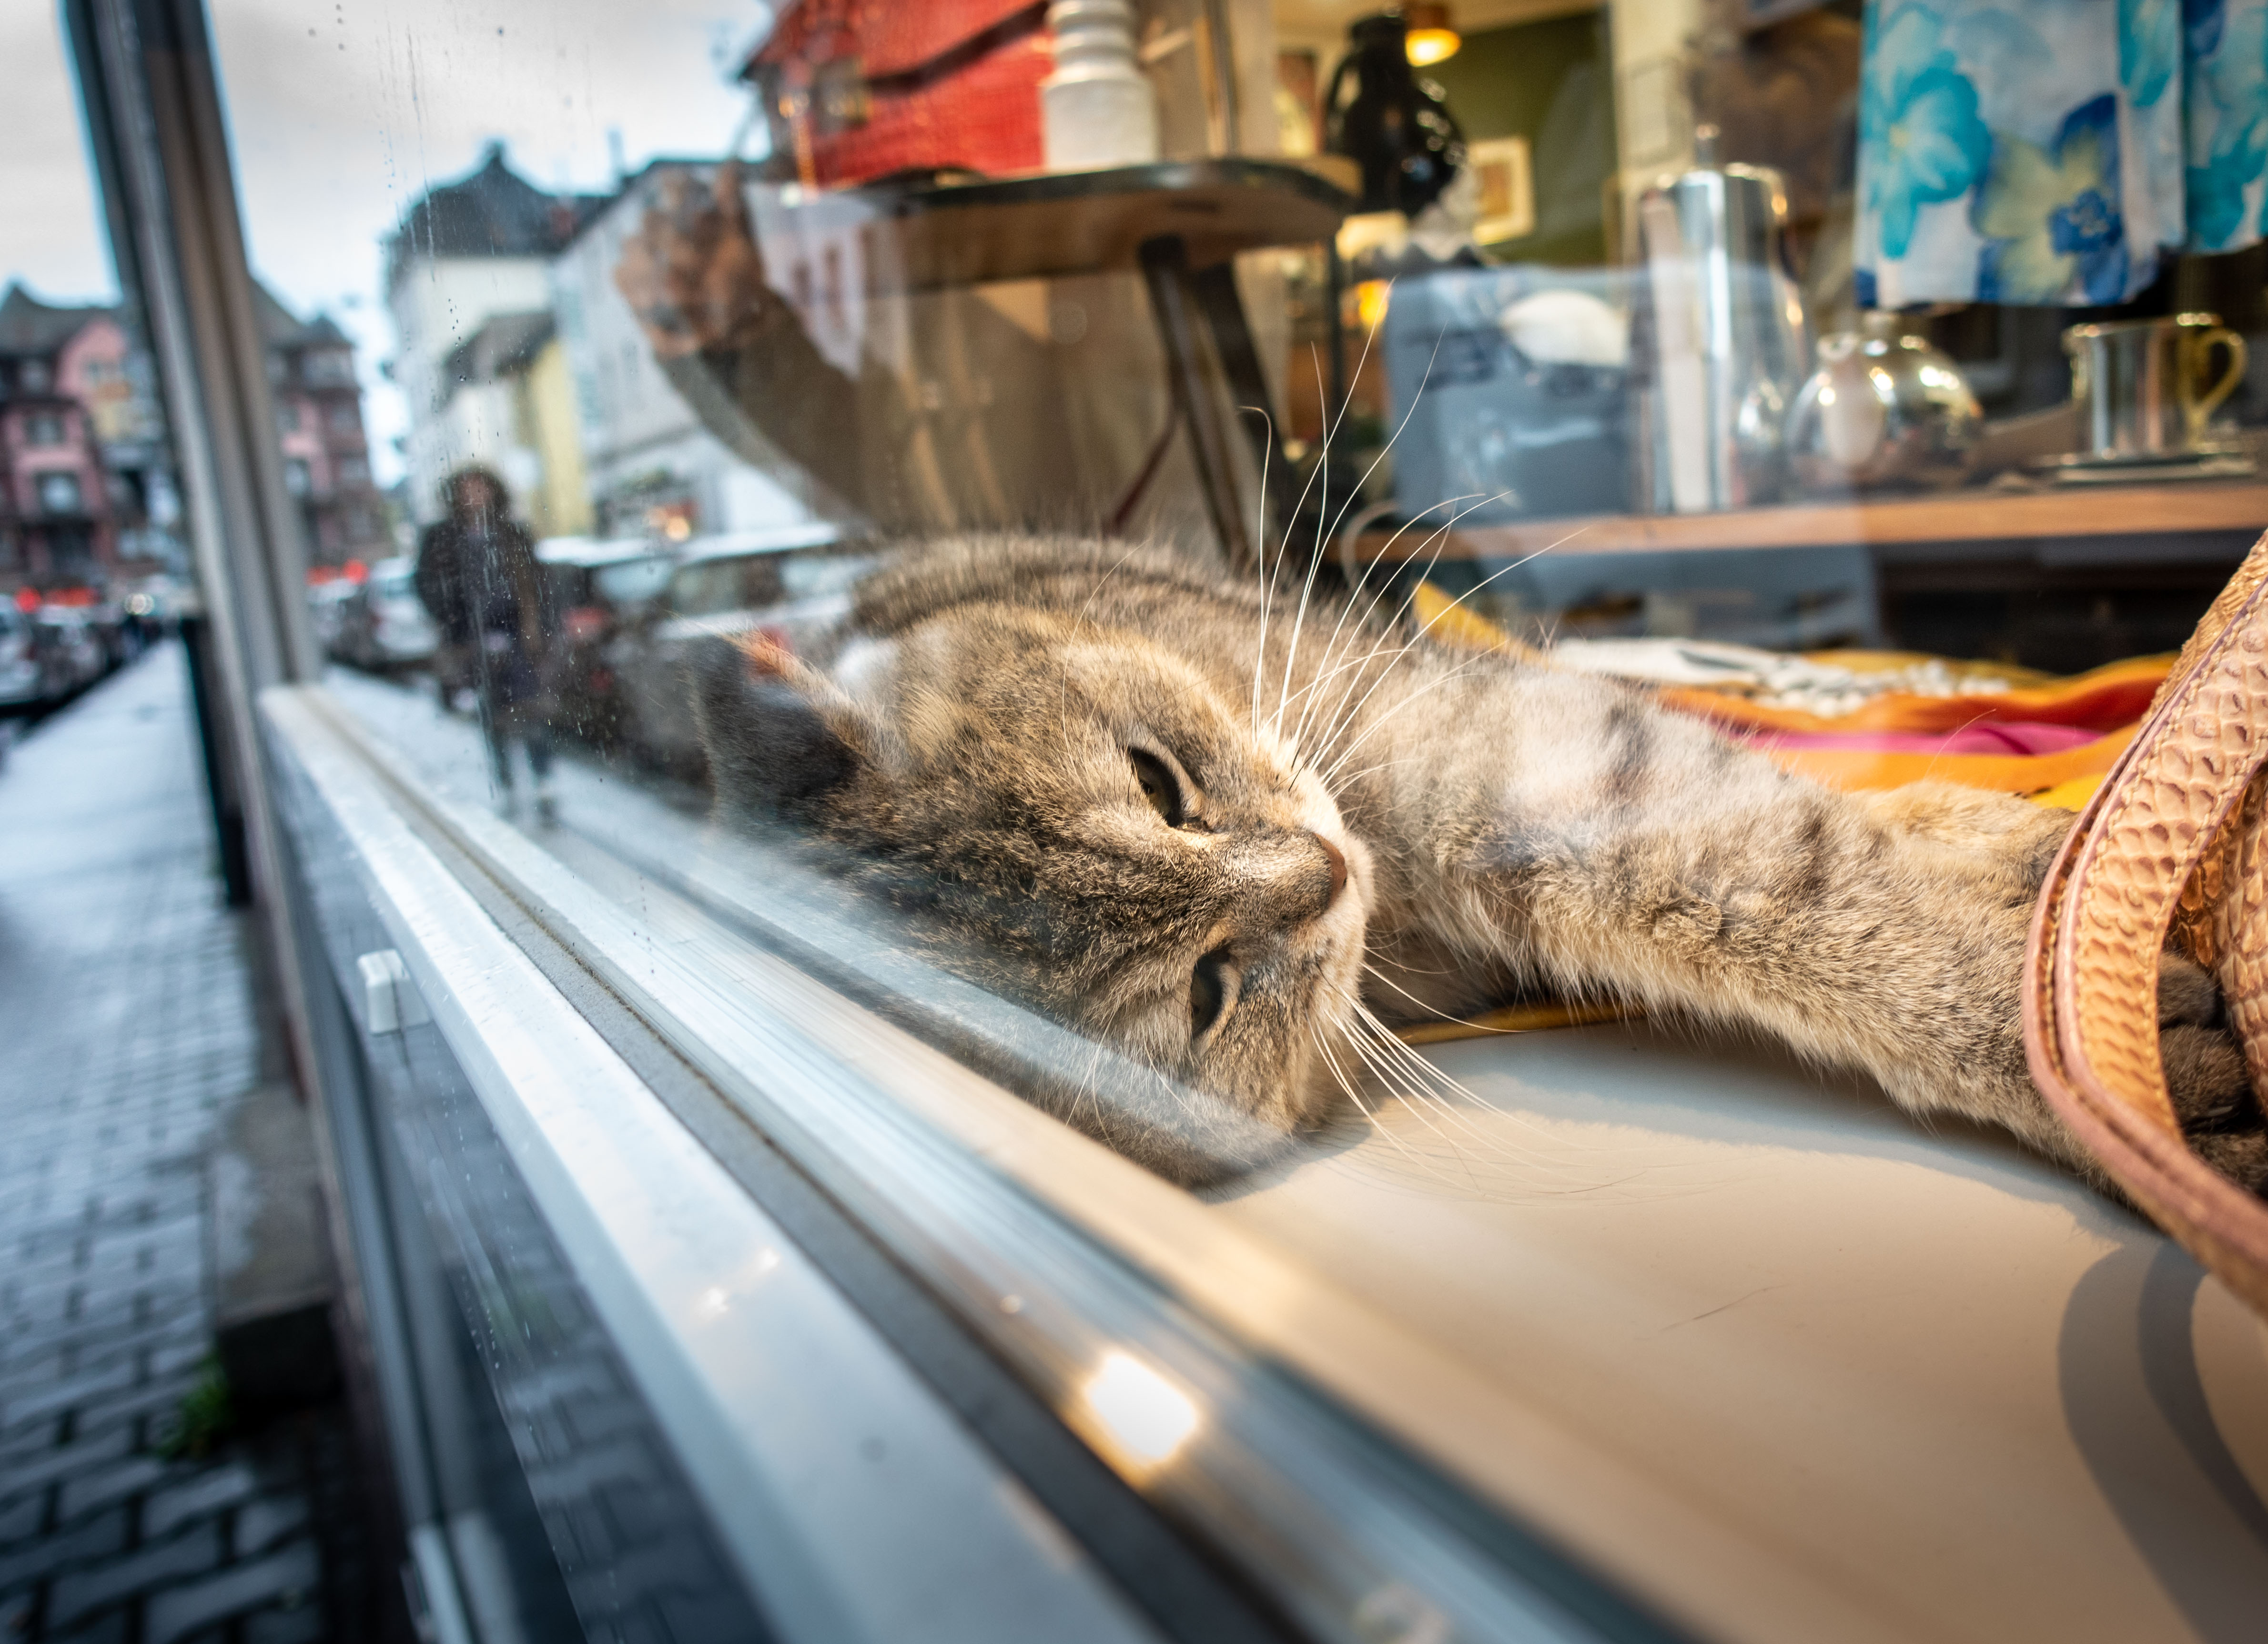 Shop window cat